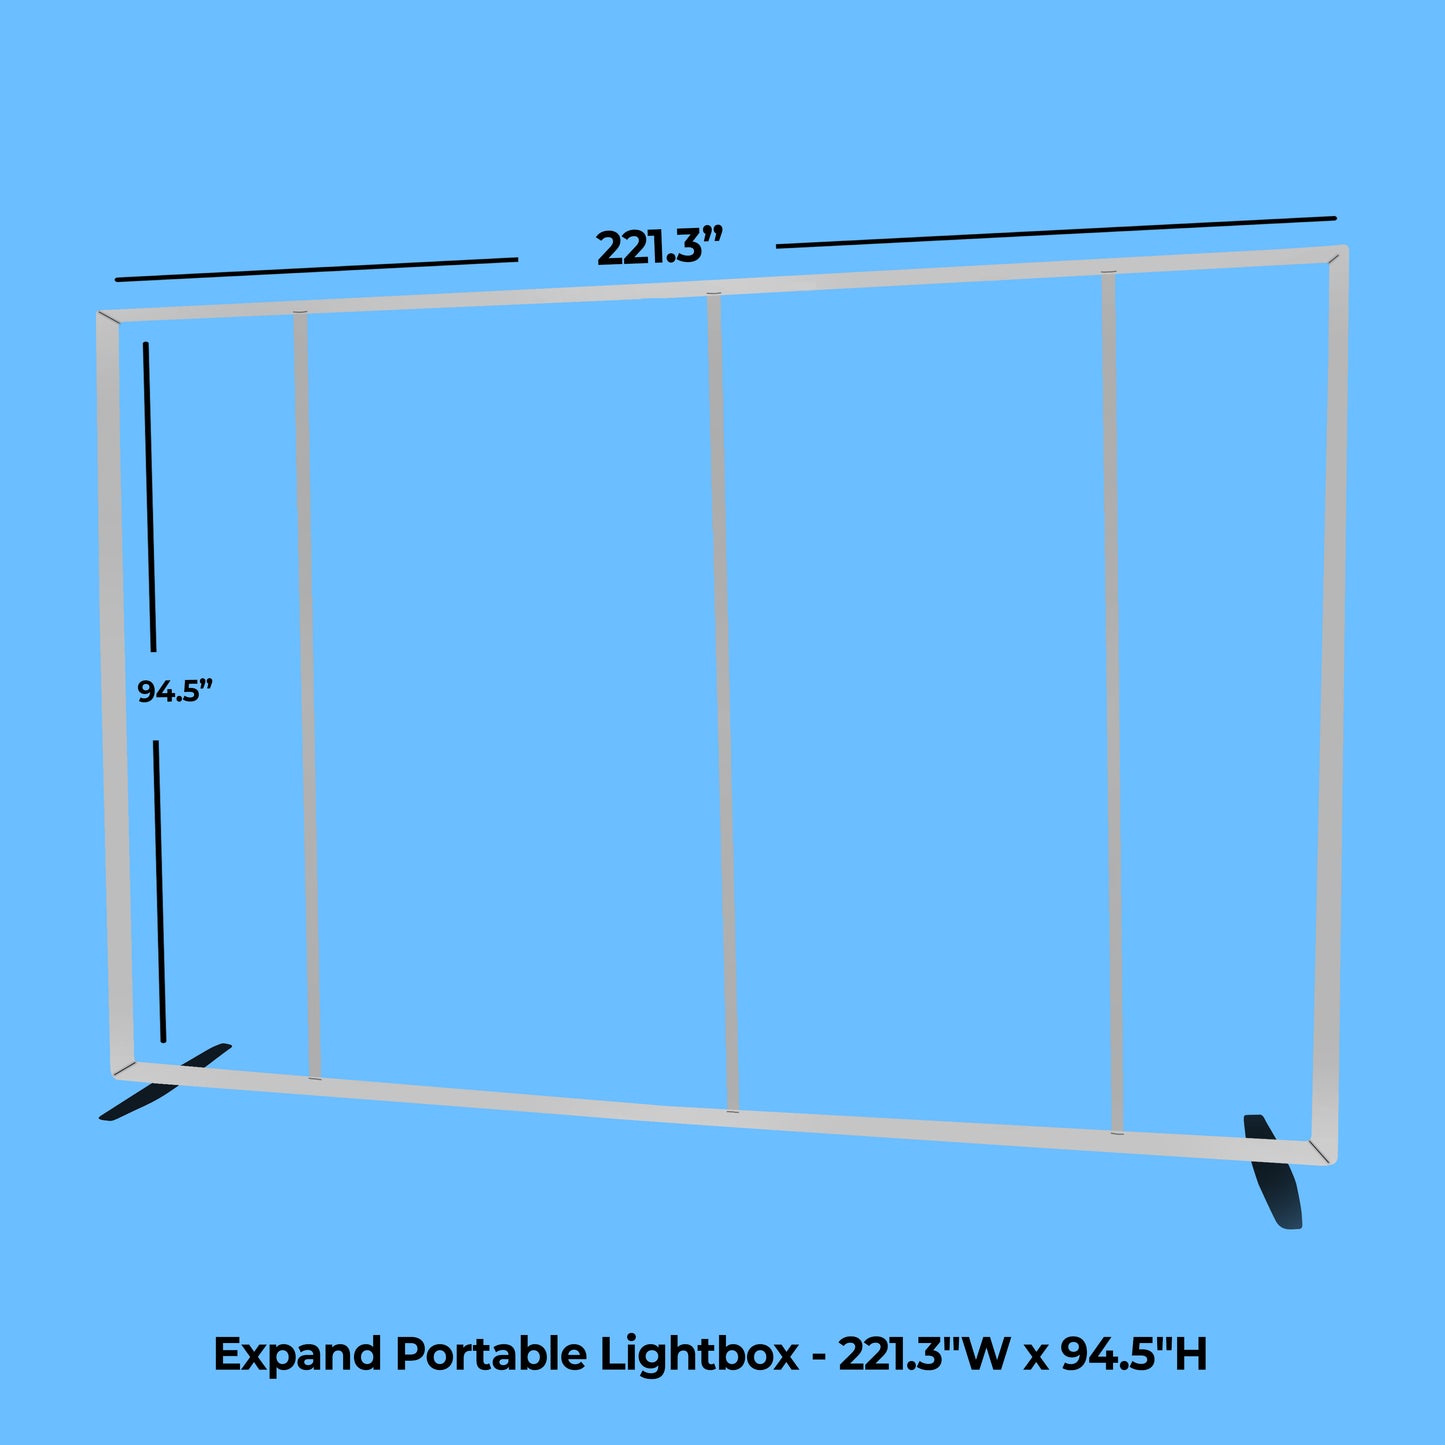 Expand Portable Lightbox - 221.3"W x 94.5"H